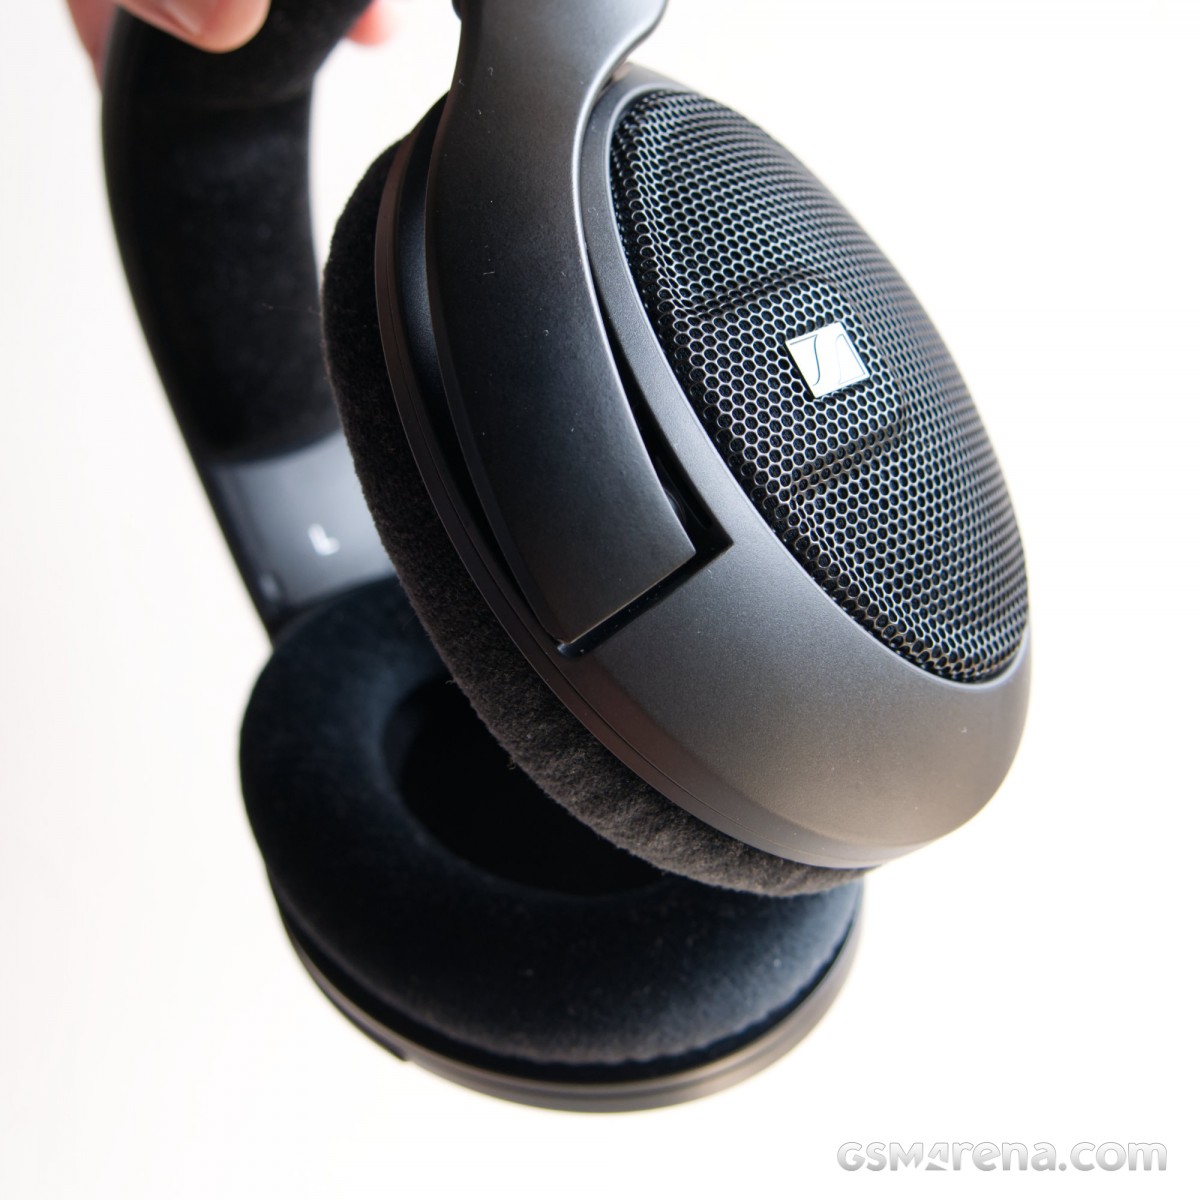 Sennheiser HD 400 Pro Professional Master Headphones Review